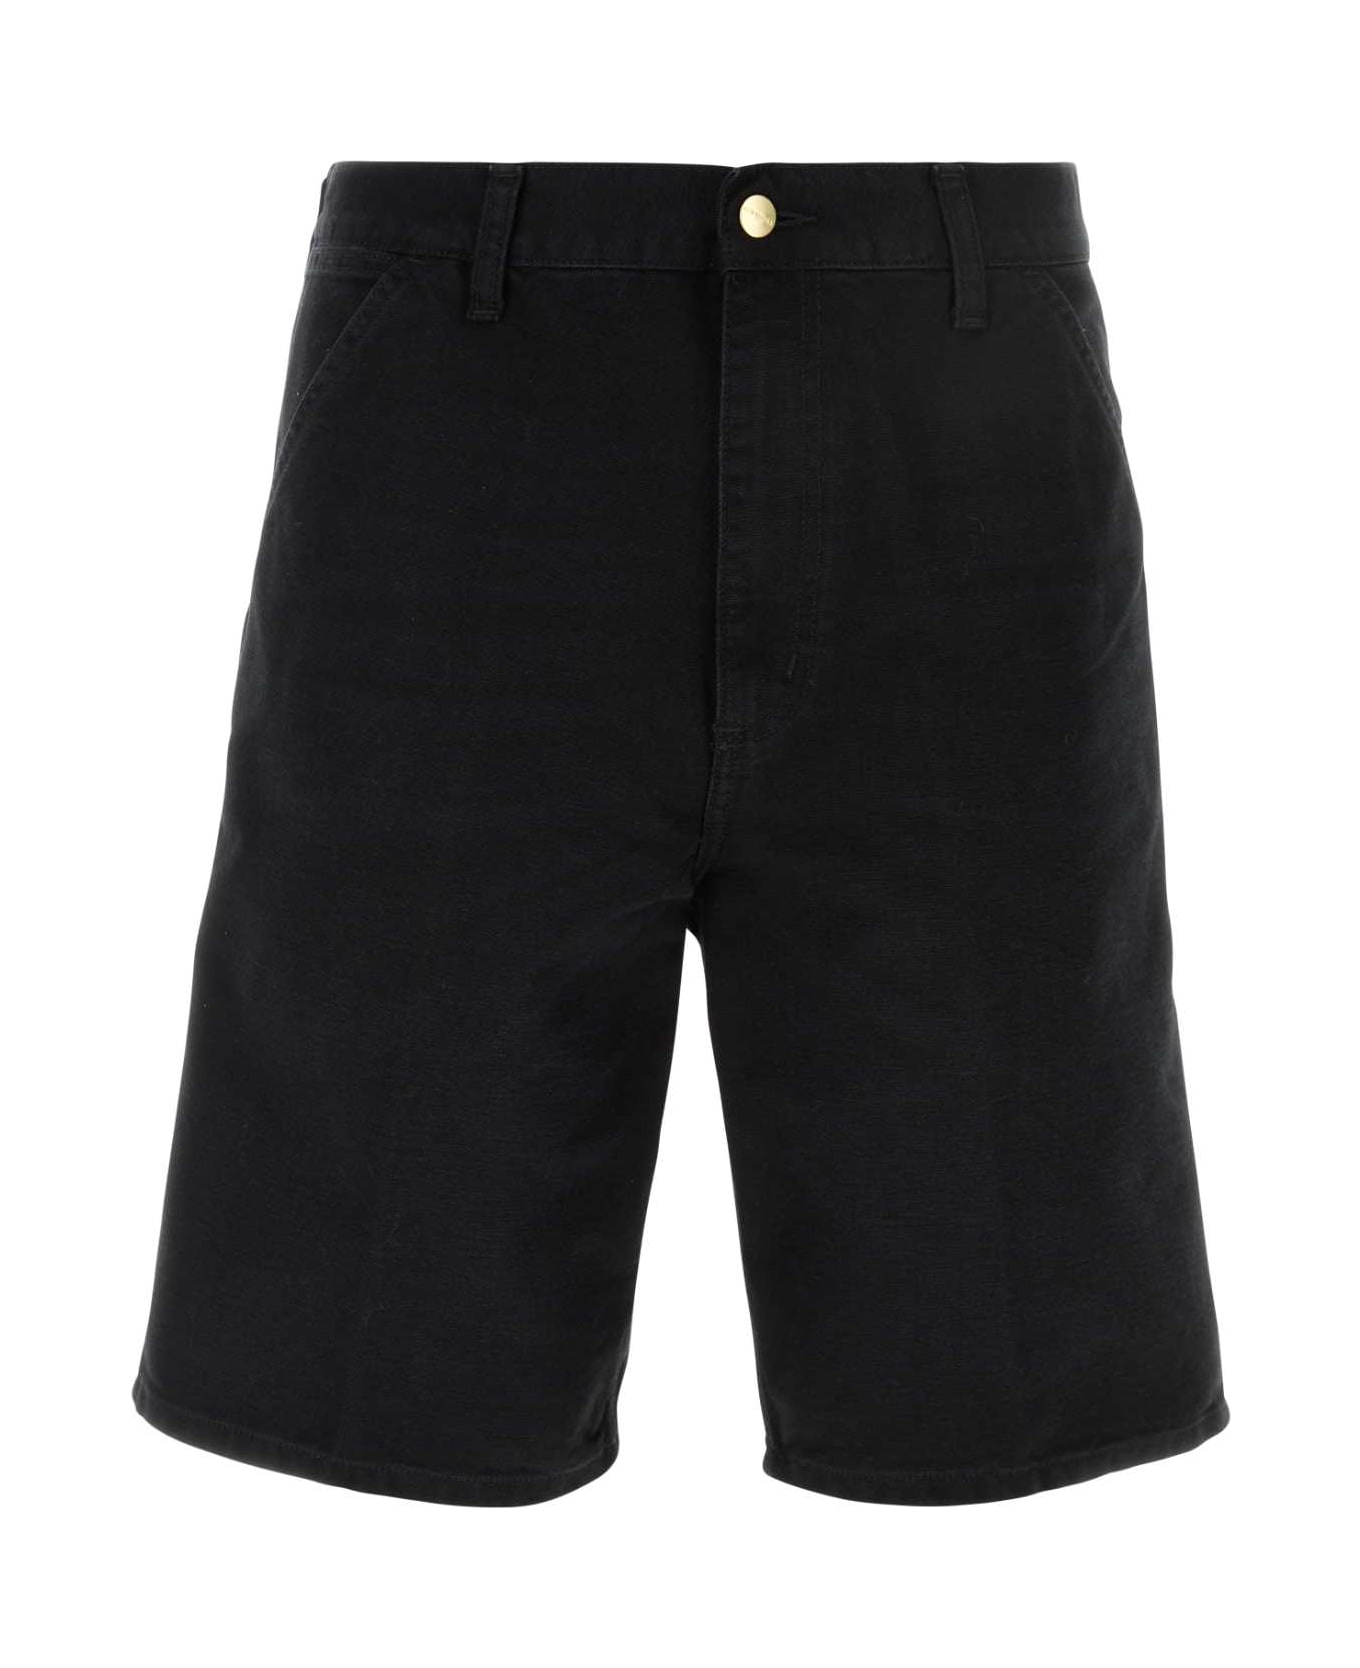 Carhartt Black Cotton Single Knee Short - BLACK